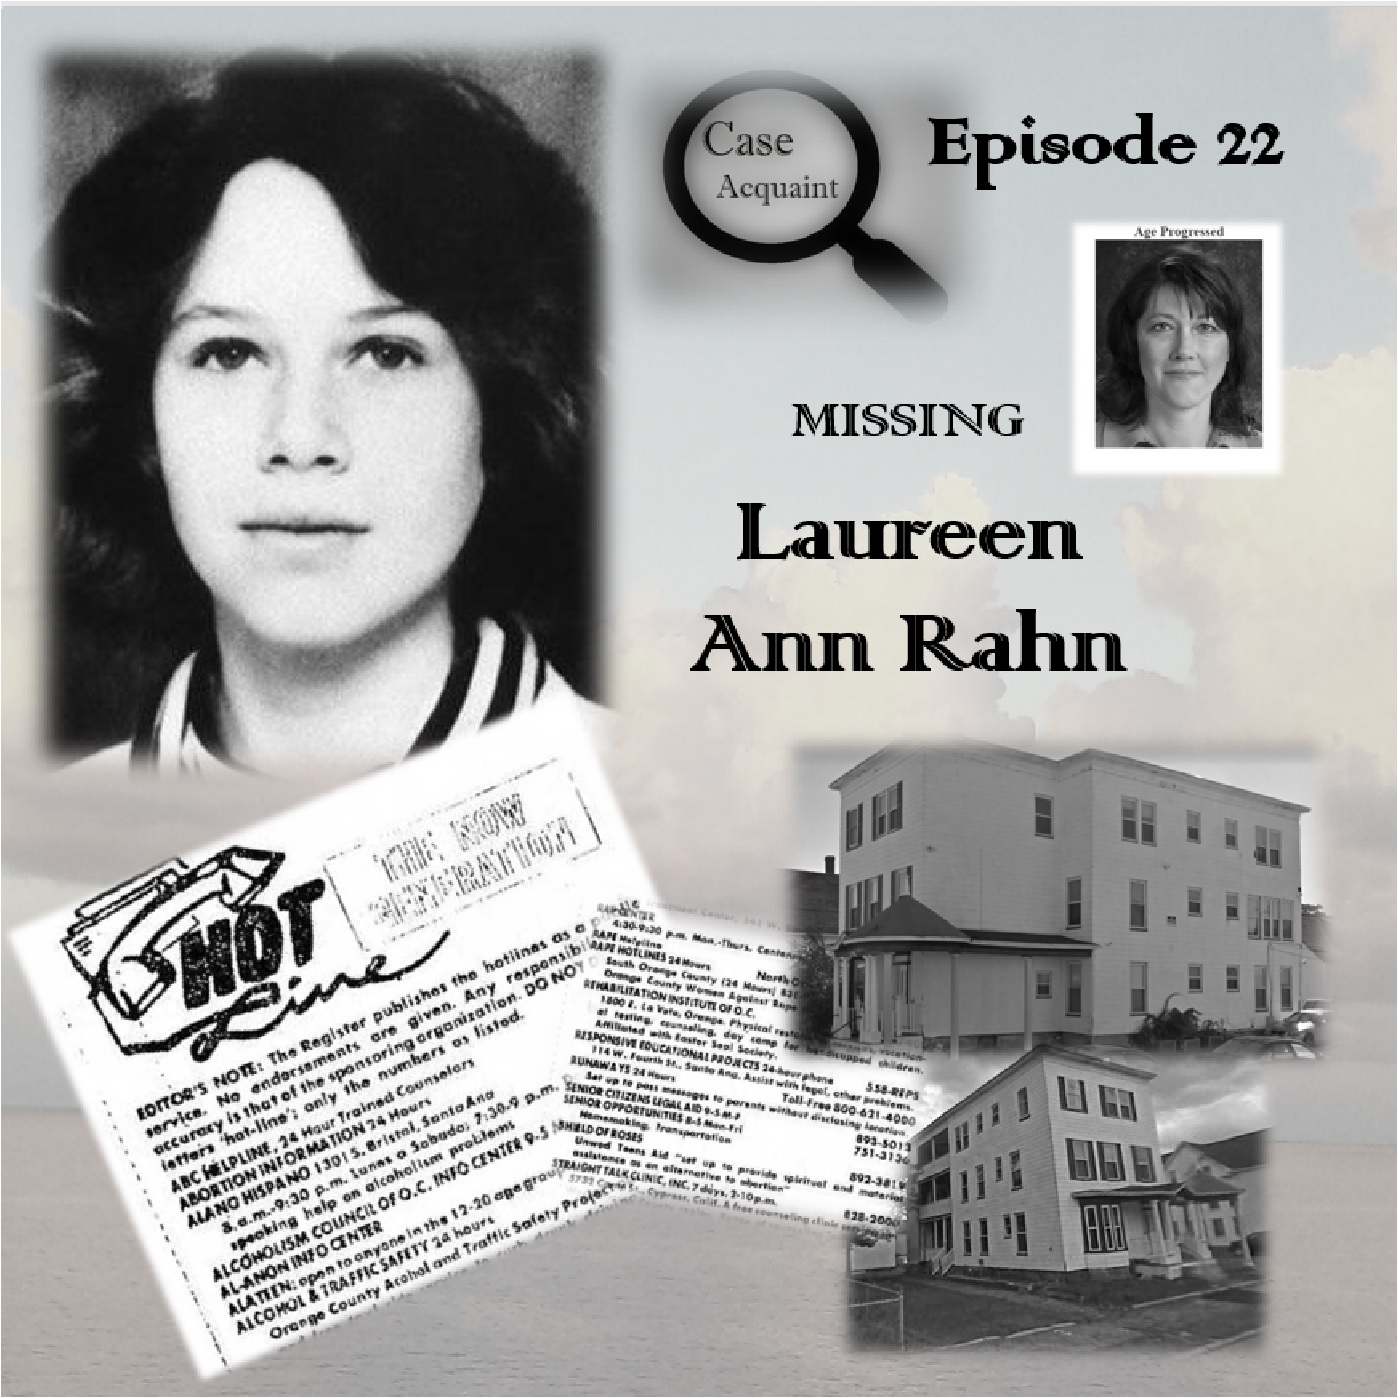 Episode 22 MISSING Laureen Ann Rahn